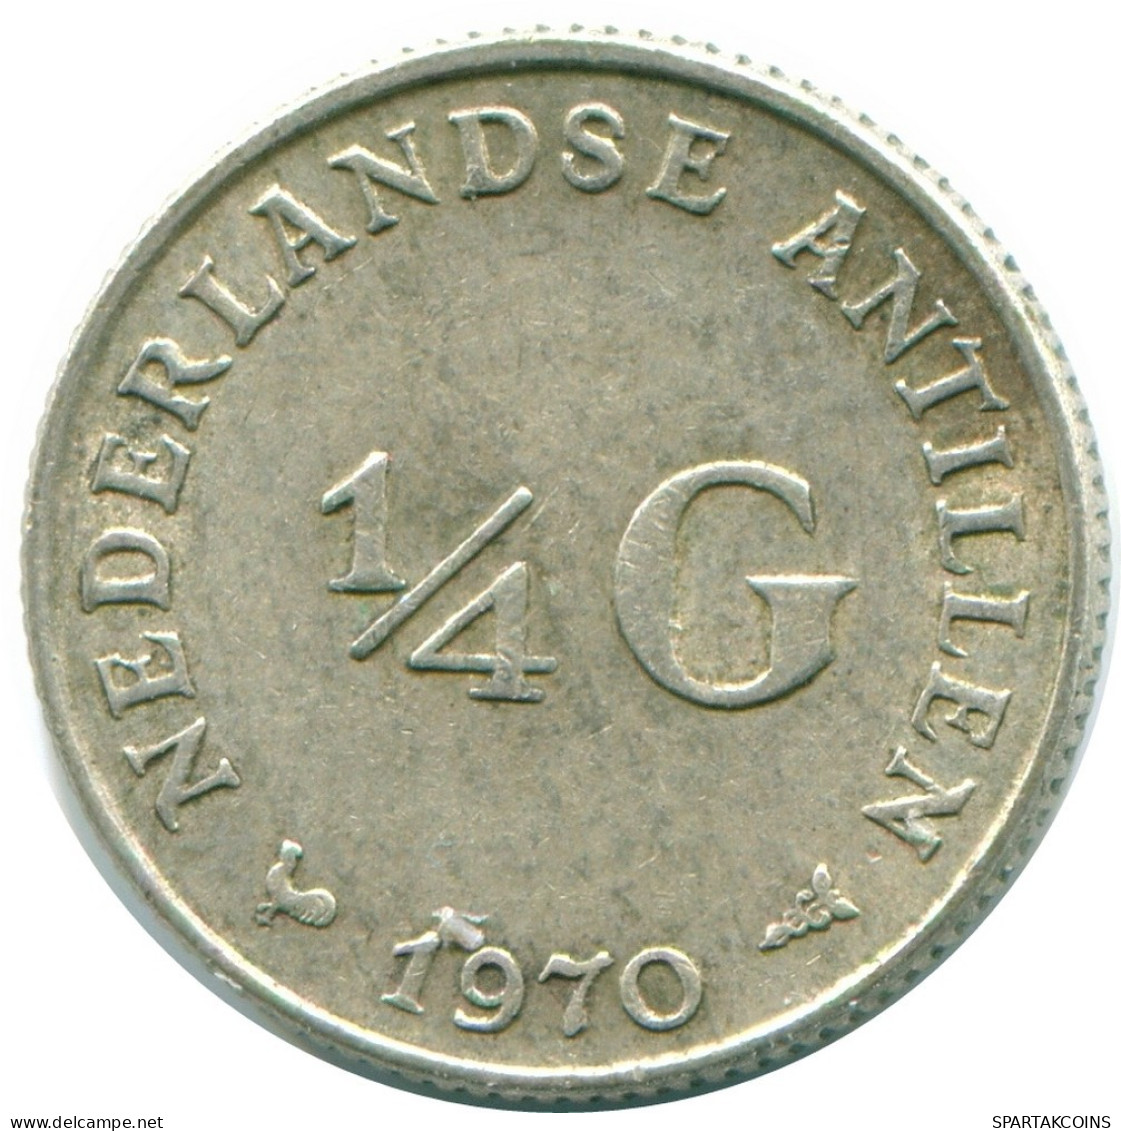 1/4 GULDEN 1970 ANTILLAS NEERLANDESAS PLATA Colonial Moneda #NL11686.4.E.A - Netherlands Antilles